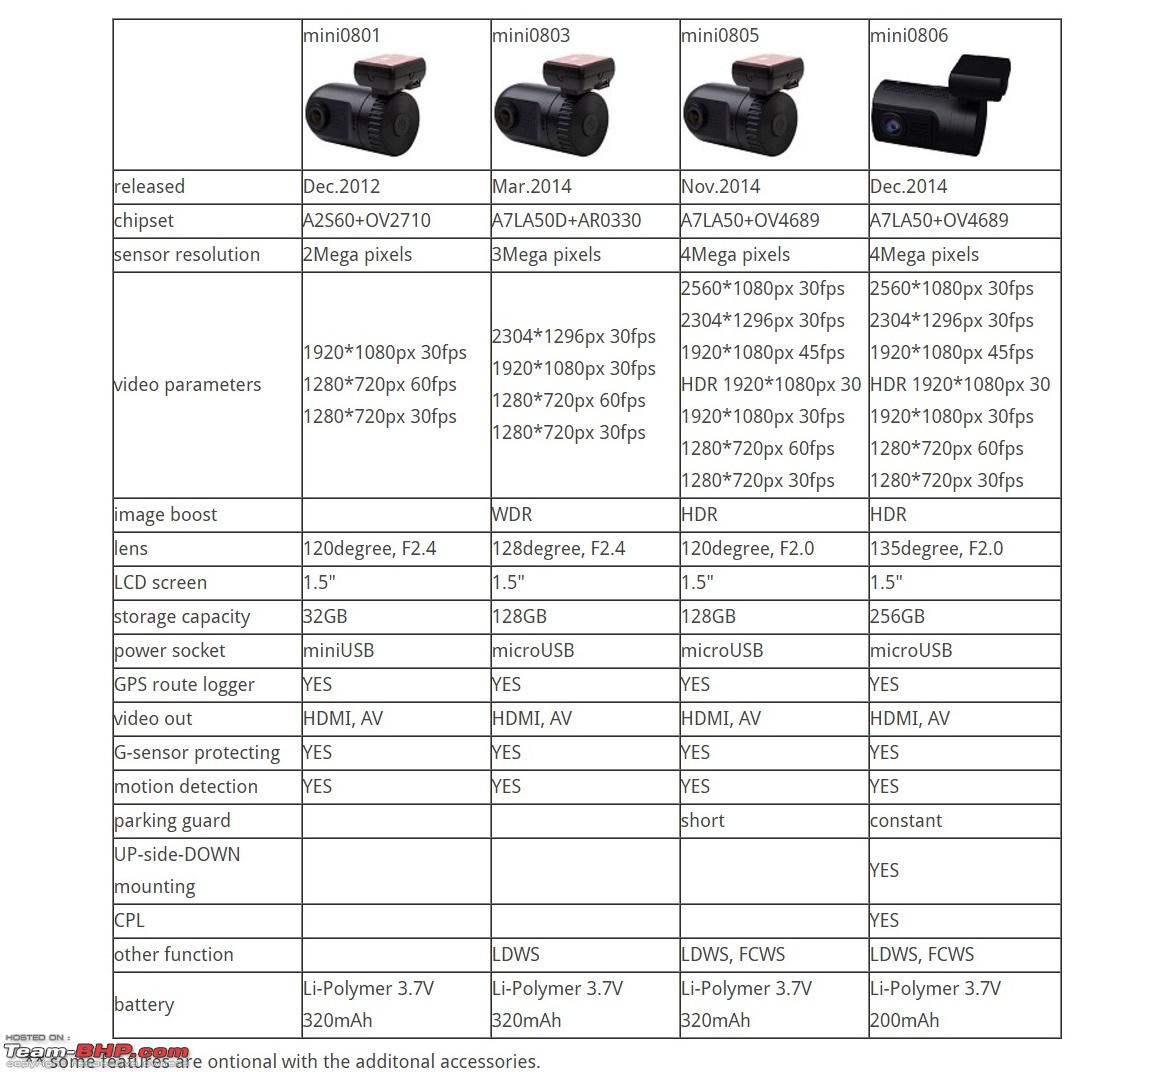 Harmoni vejkryds Faldgruber DIY Install & Review - The Mini 0806 Dash Camera - Team-BHP